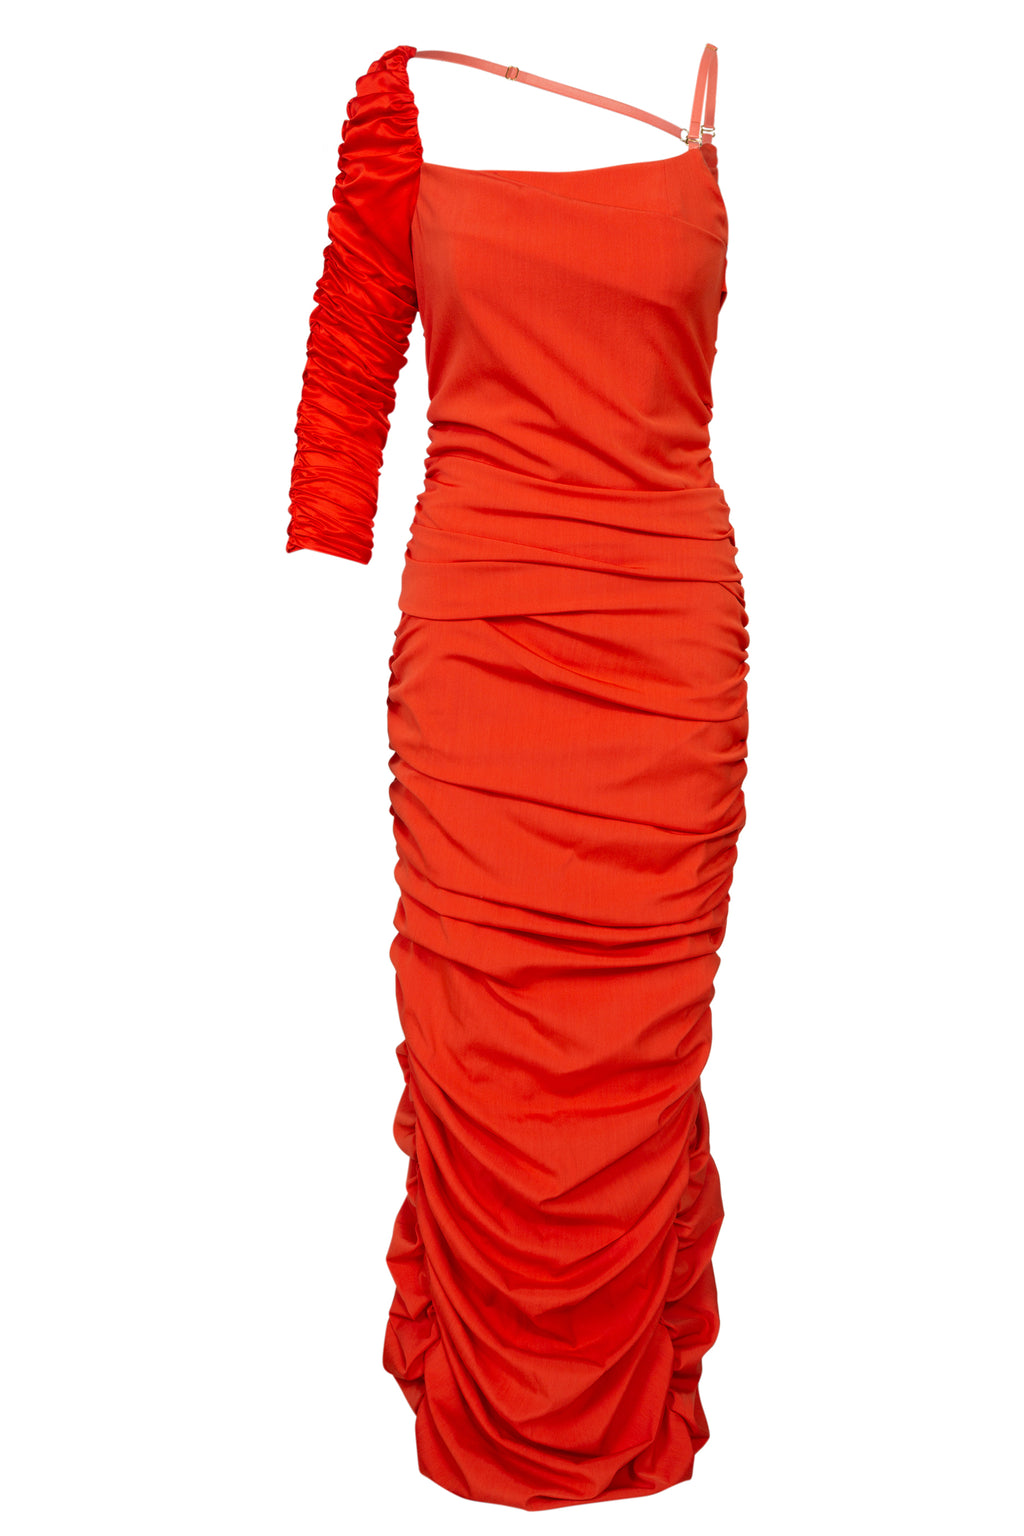 Harbison Ceres Dress in Poppy | PF '22 Runway (est. retail $1,595 ...